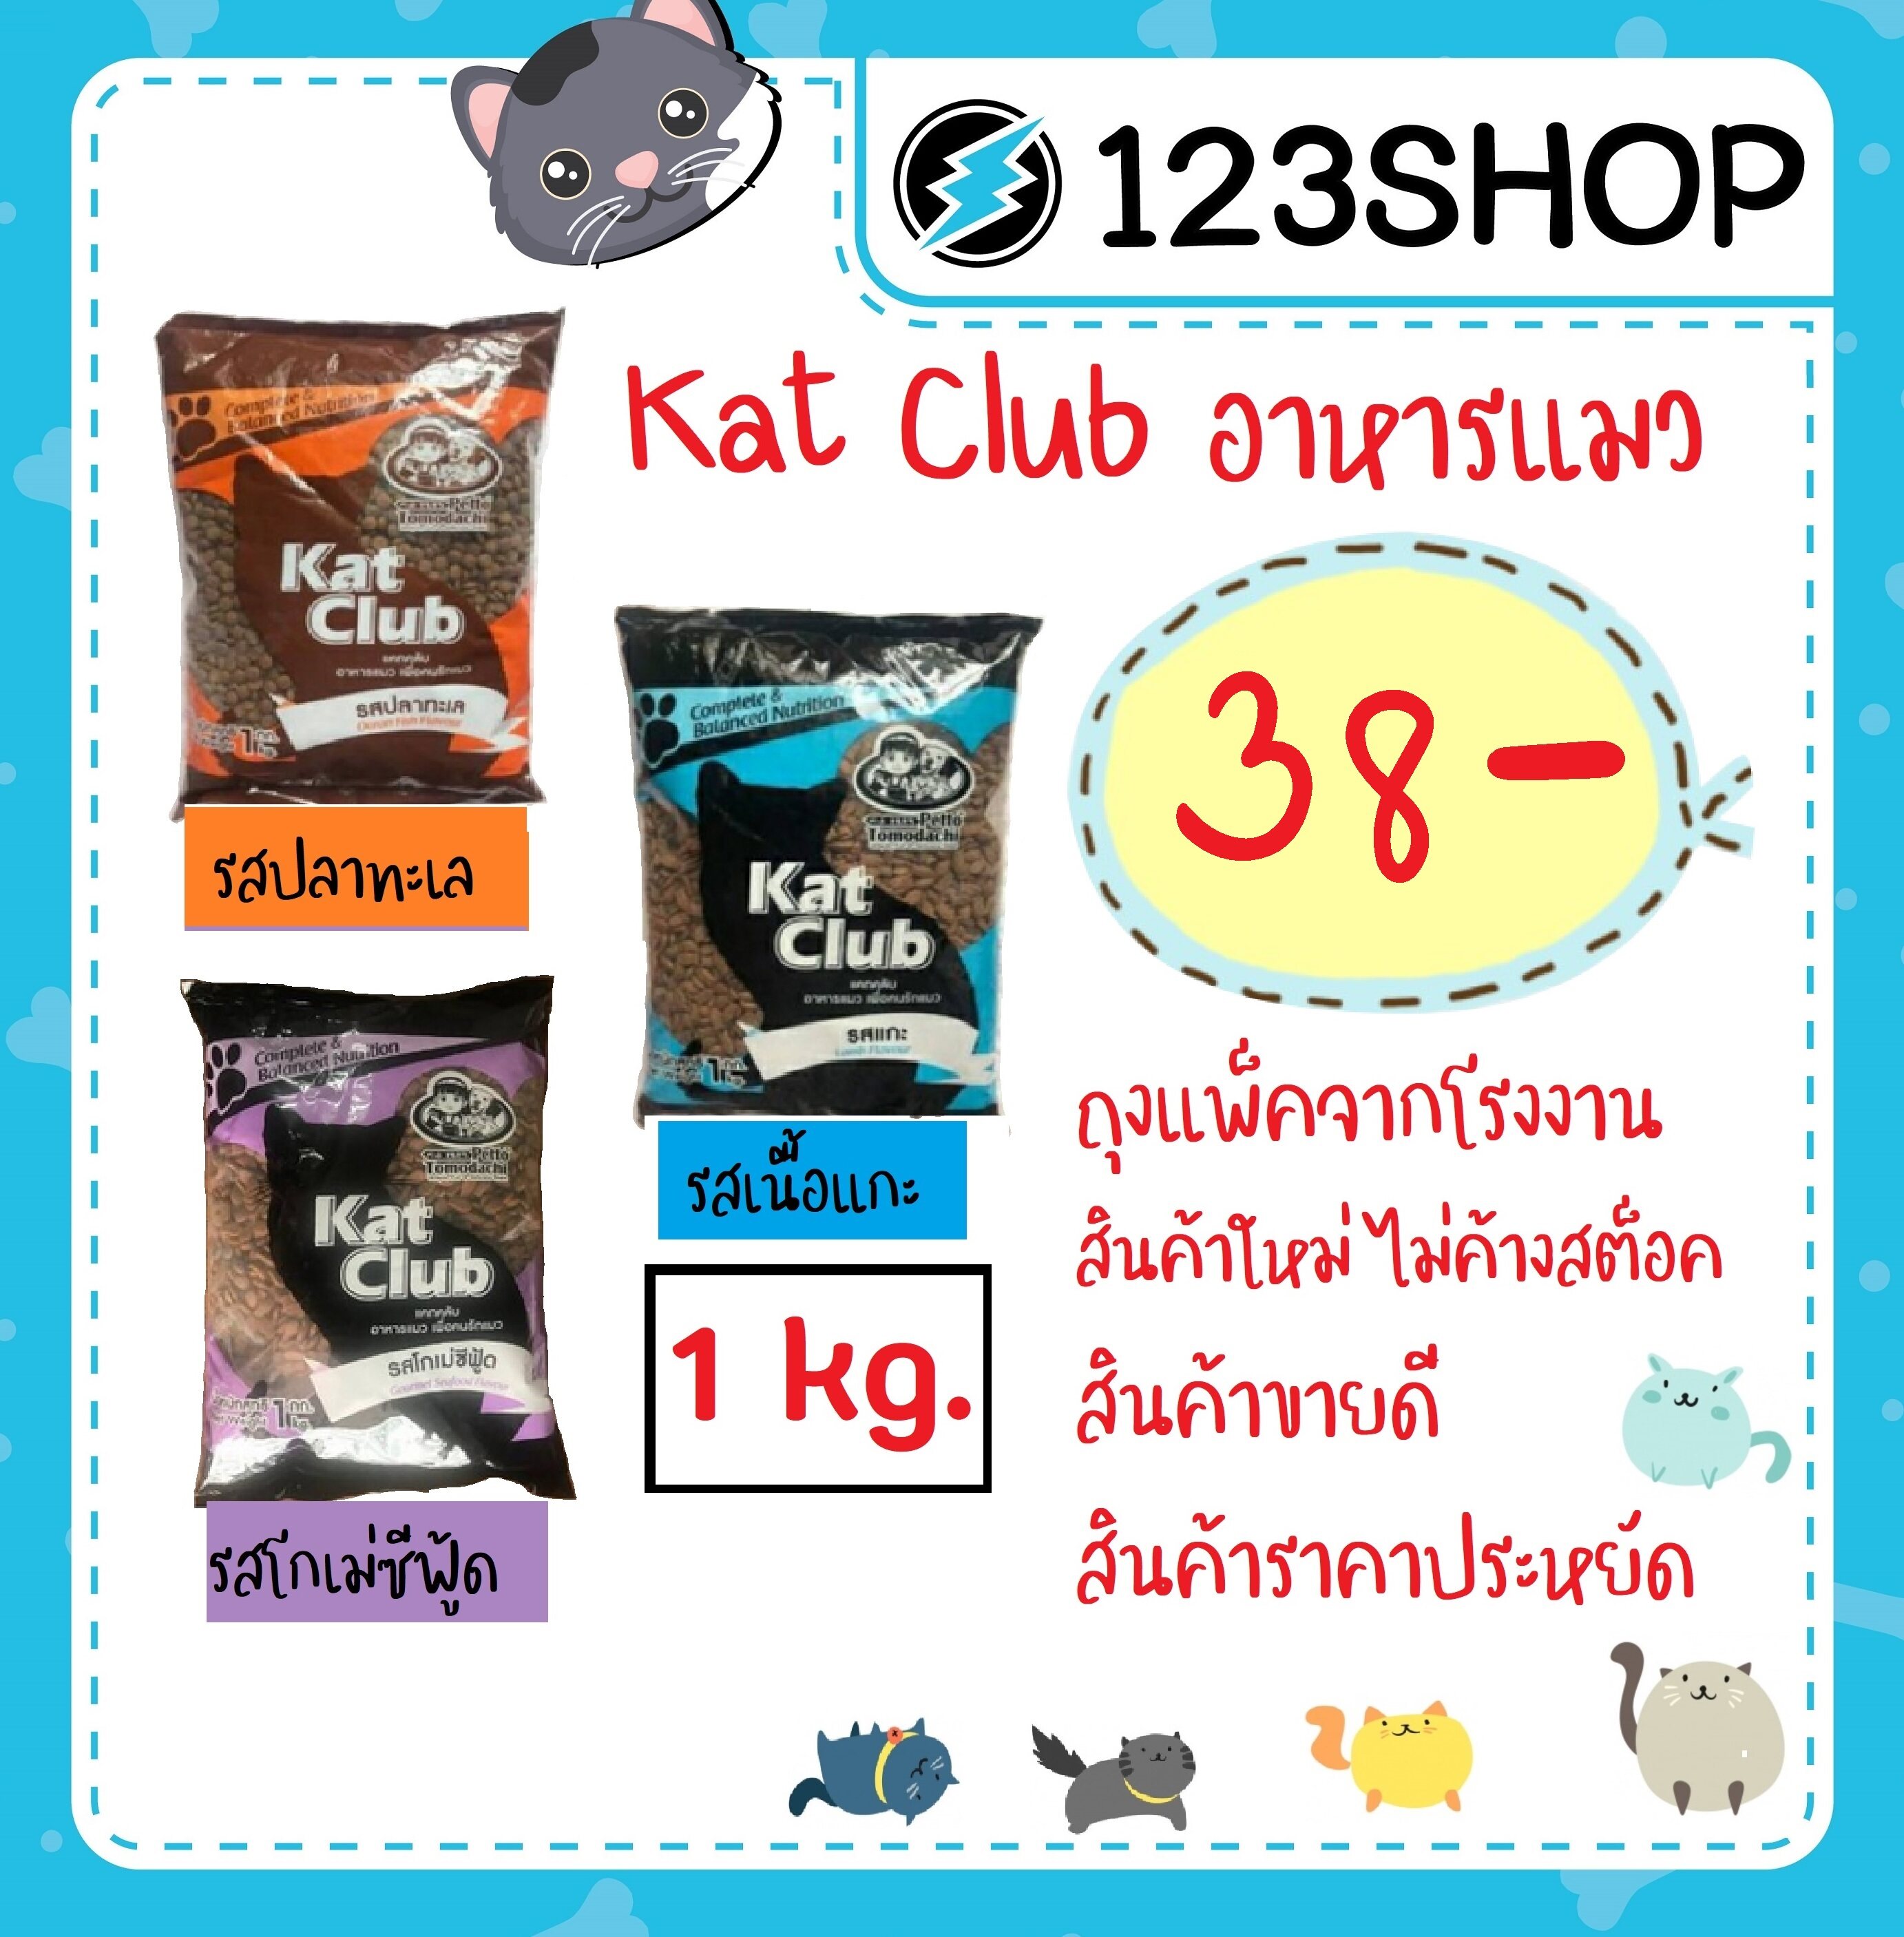 Kat club อาหารแมว  รสปลาทะเล, เนื้อแกะ, โกเม่ ซีฟู้ด บรรจุ1kg แพ็คถุงบริษัท (ร้านจริง โปรดระวังร้านปลอม)